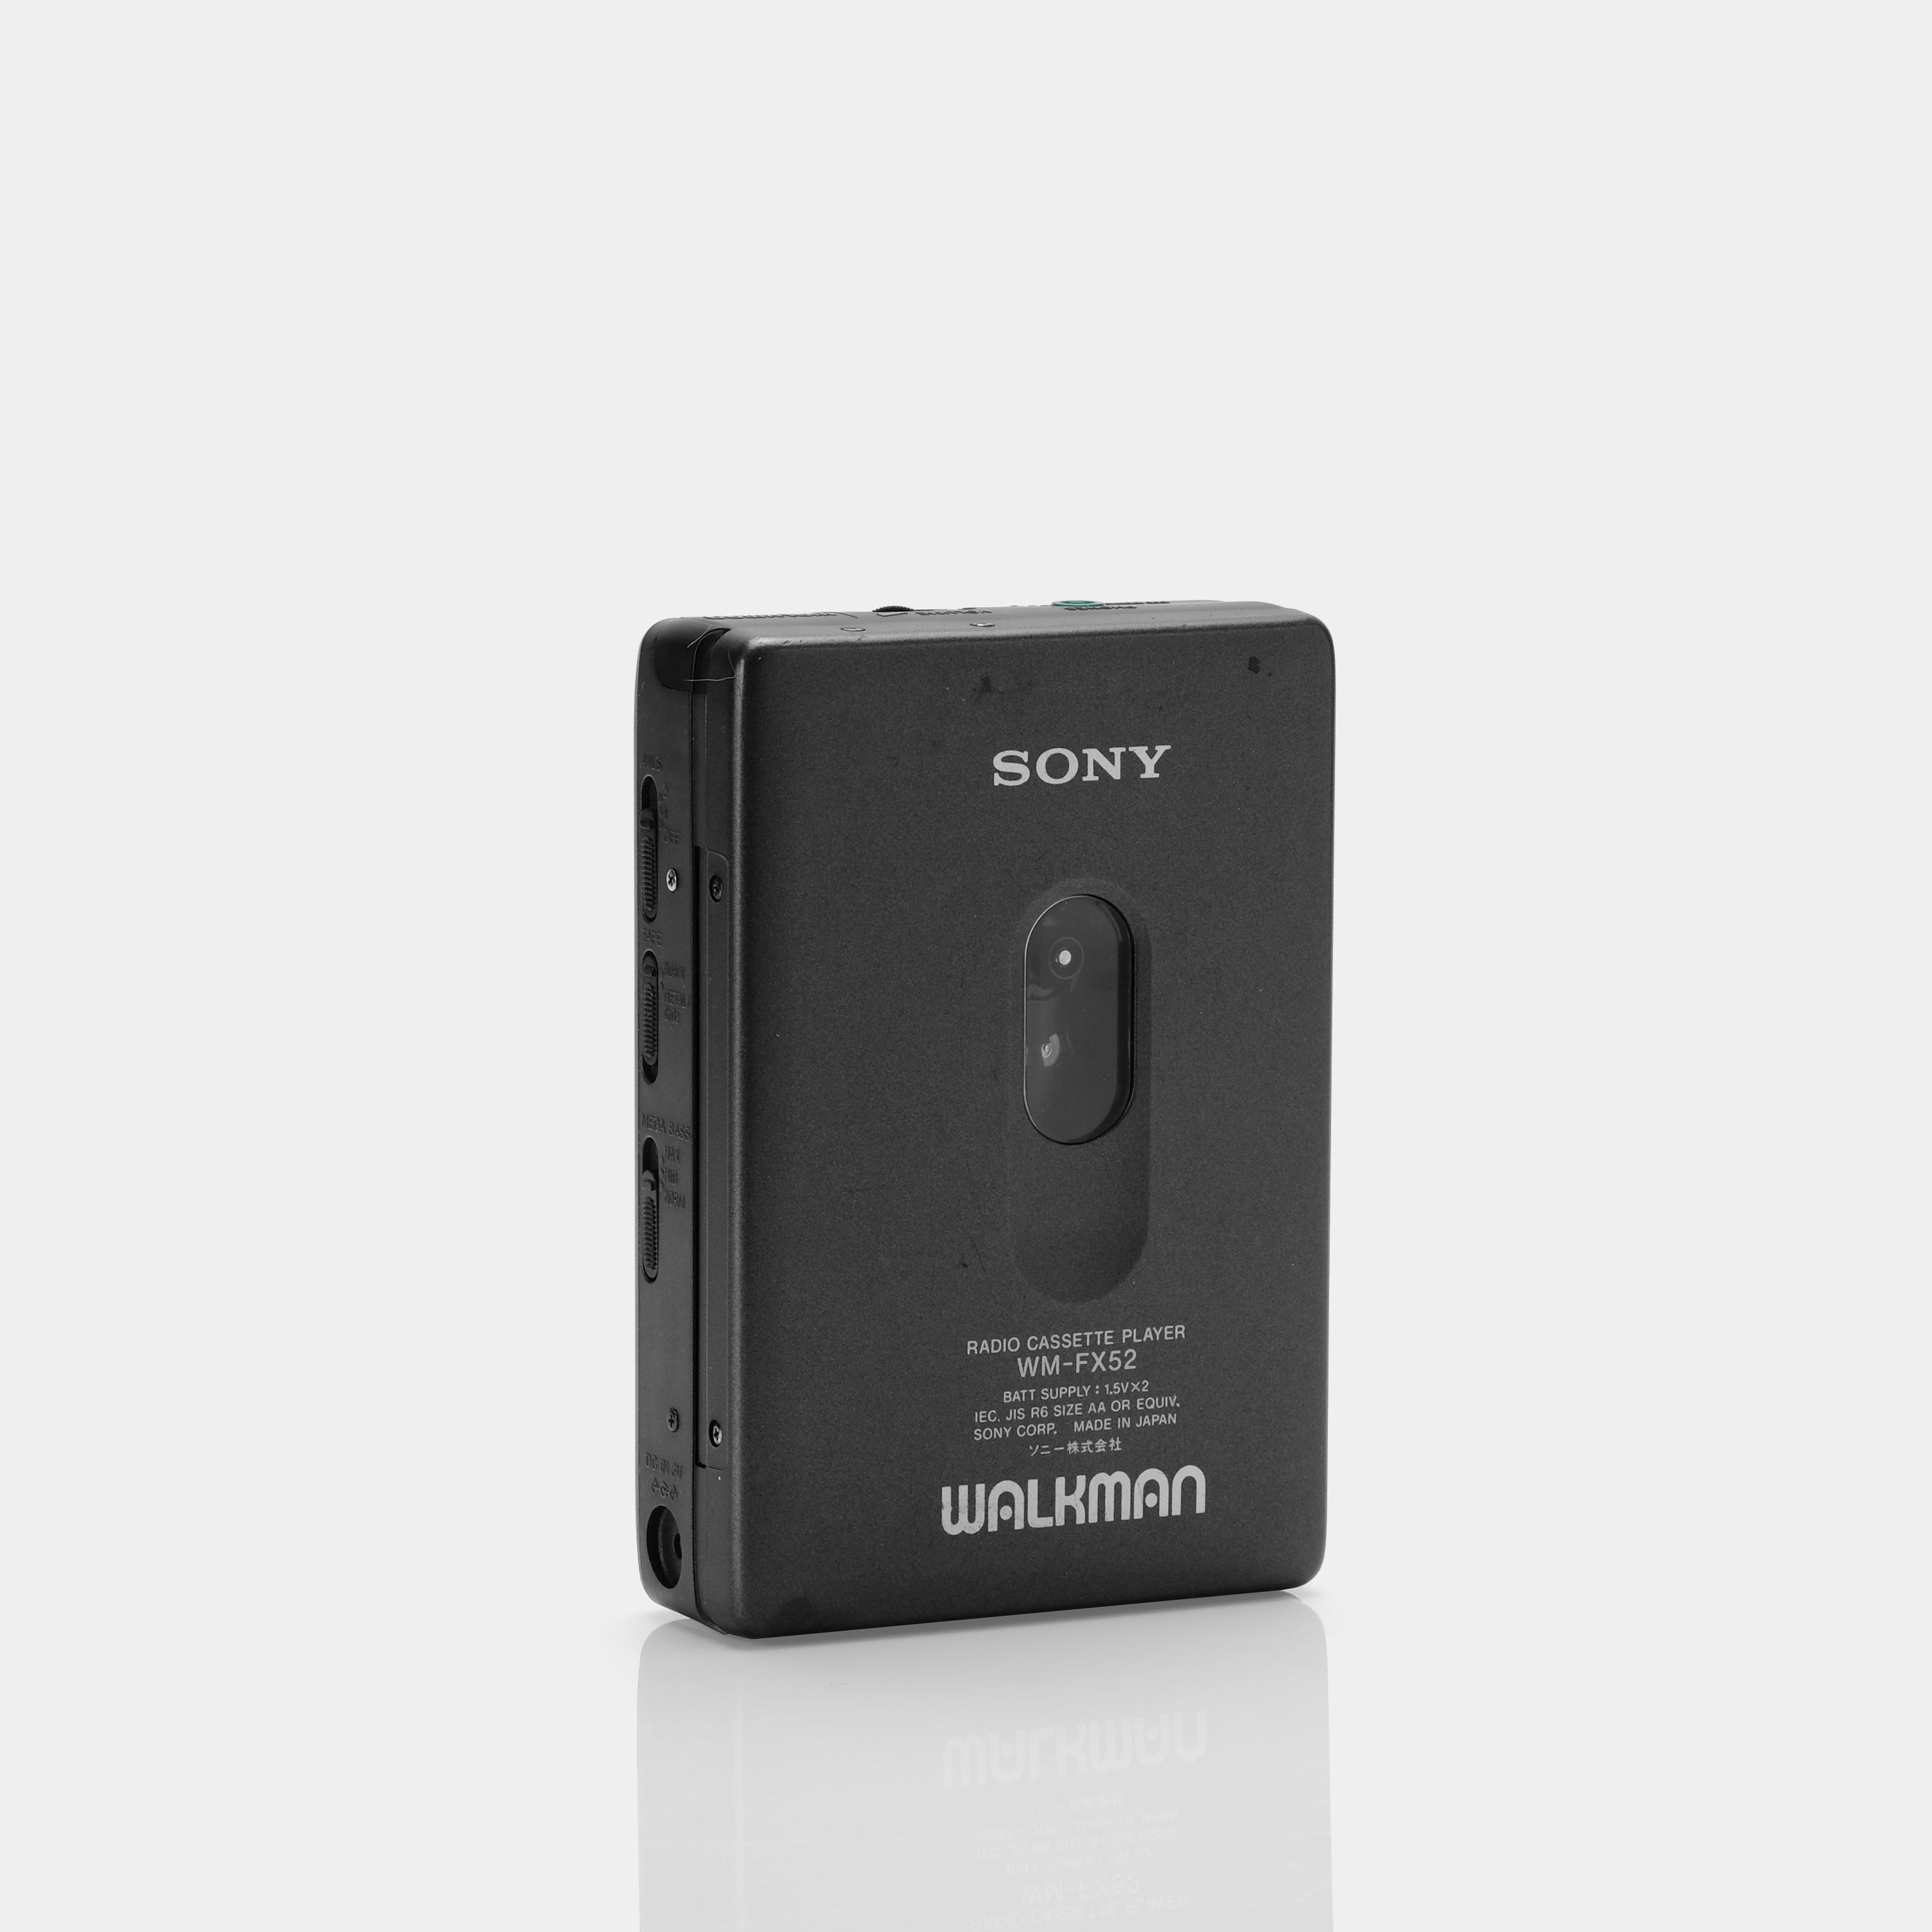 Sony Walkman WM-FX52 Portable Cassette Player